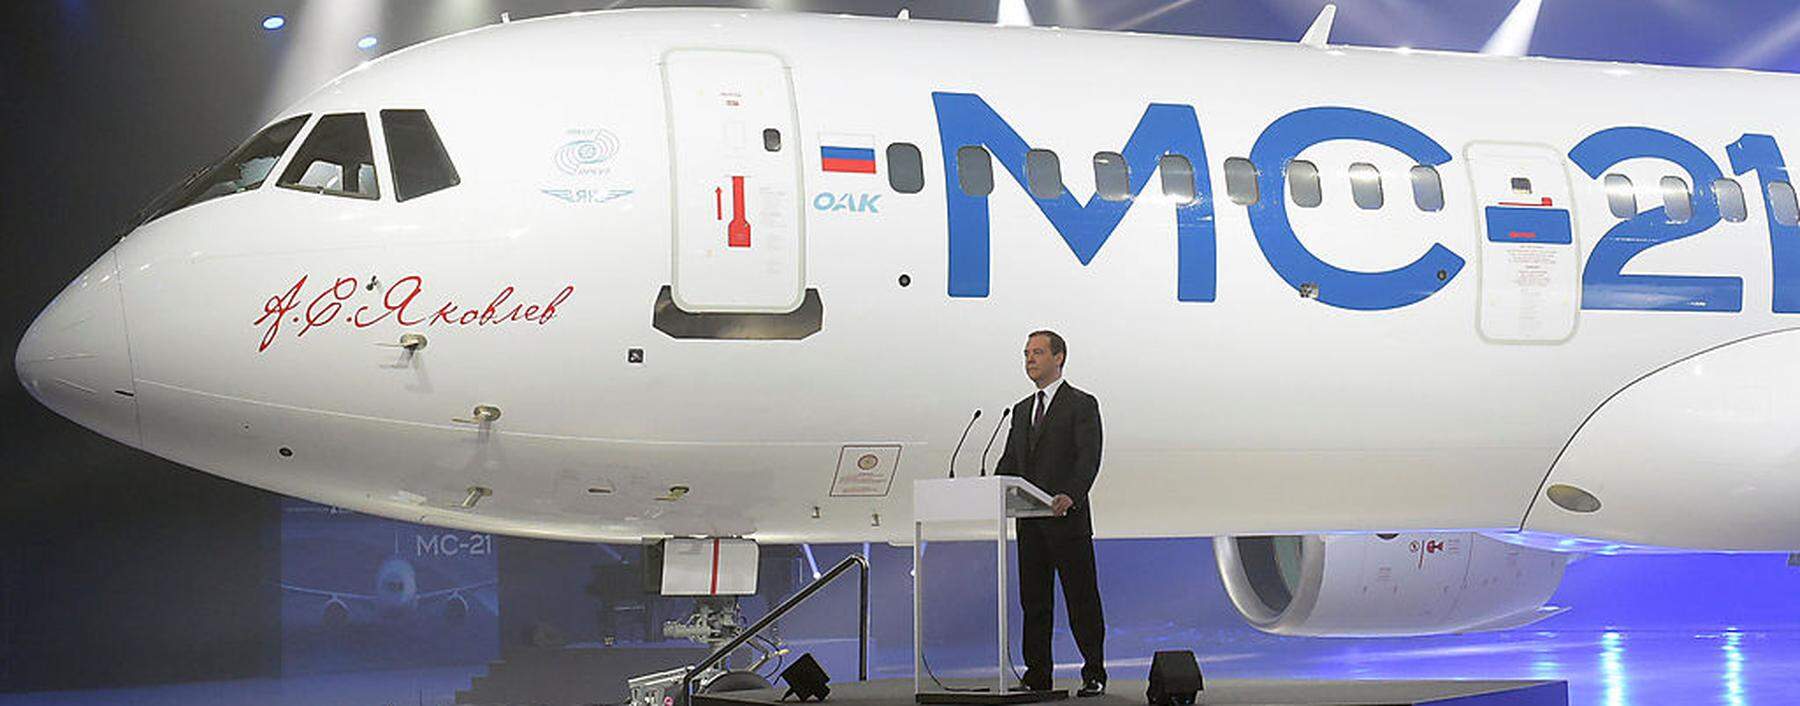 Russian Prime Minister Medvedev attends ceremony to present Irkut MC-21 jet airliner in Irkutsk